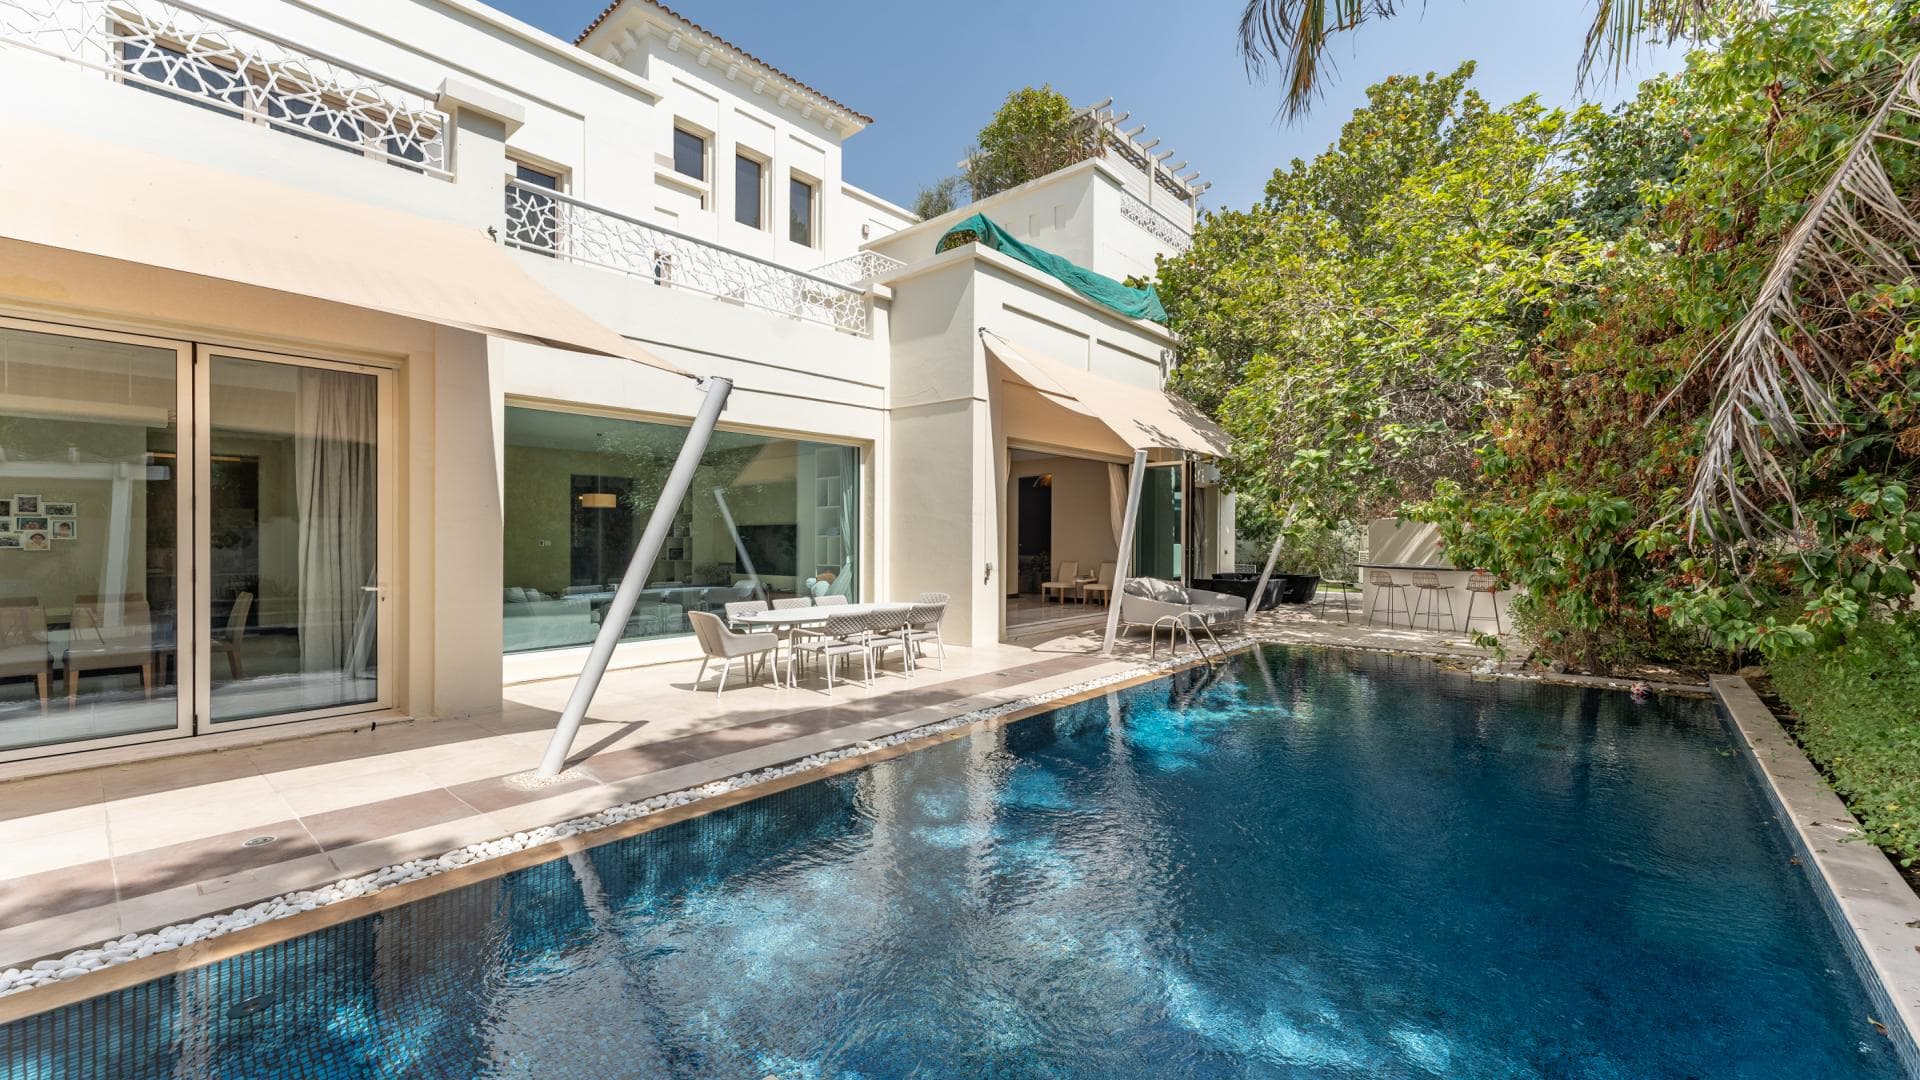 6 Bedroom Villa For Sale Al Thamam 05 Lp38452 11c0ed625d9dc900.jpg